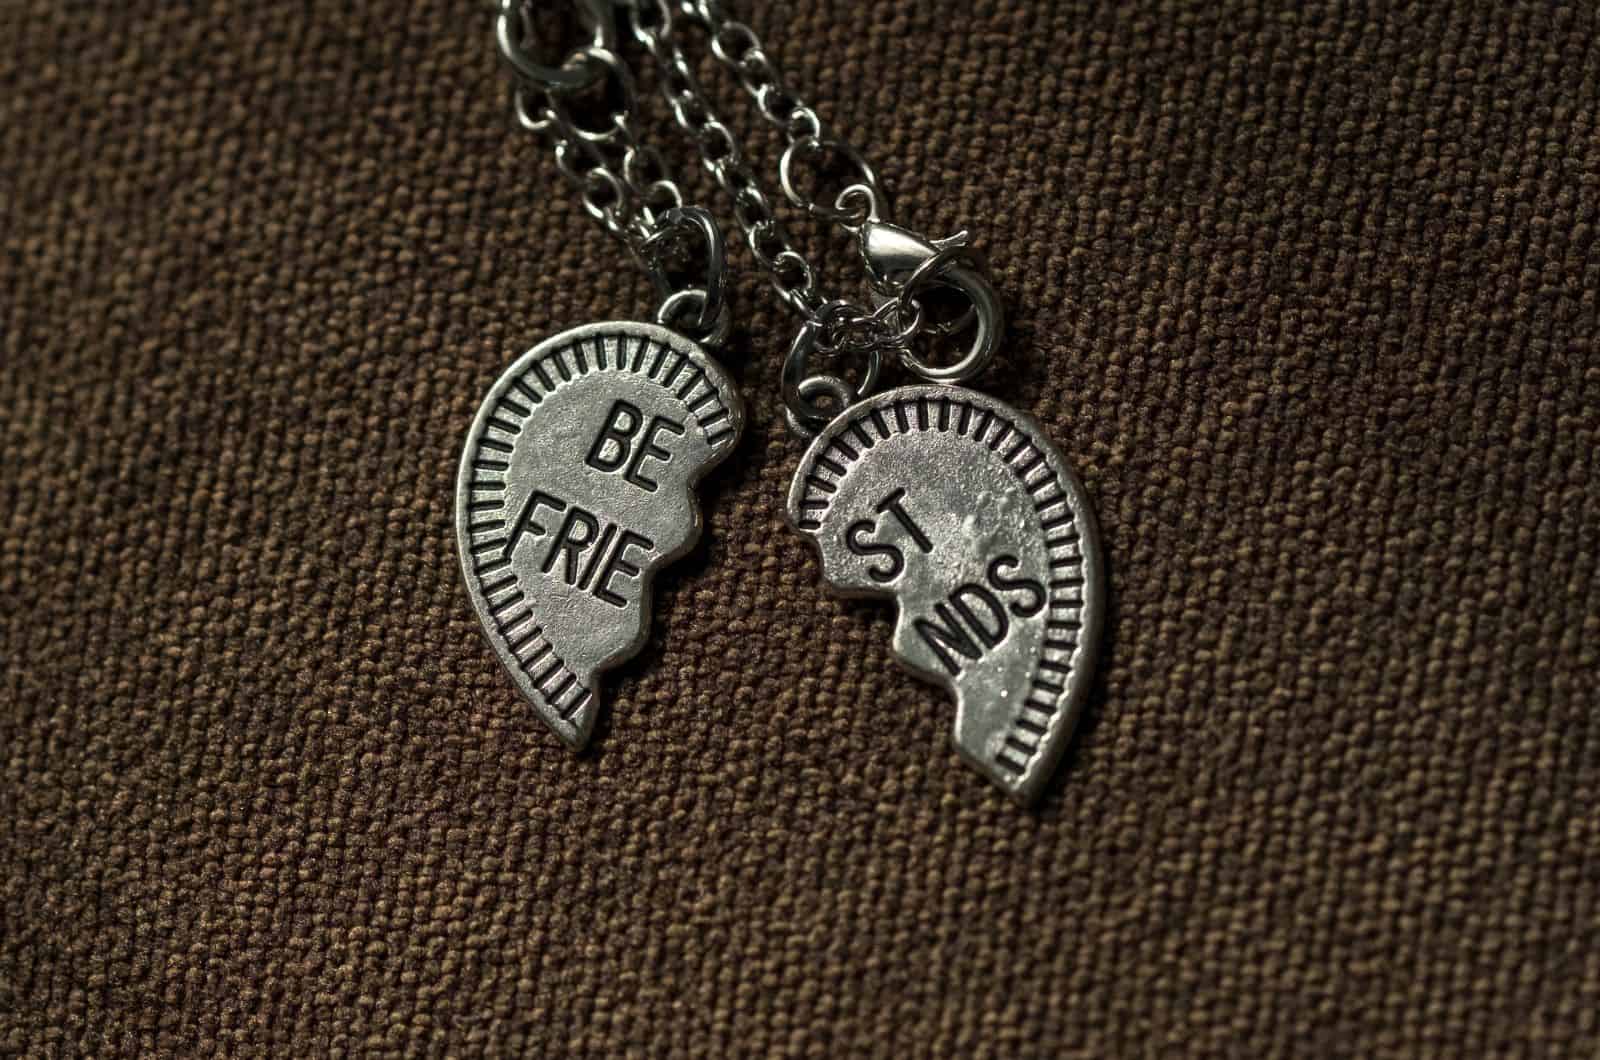 broken best friends necklace, symbolizing losing a friend